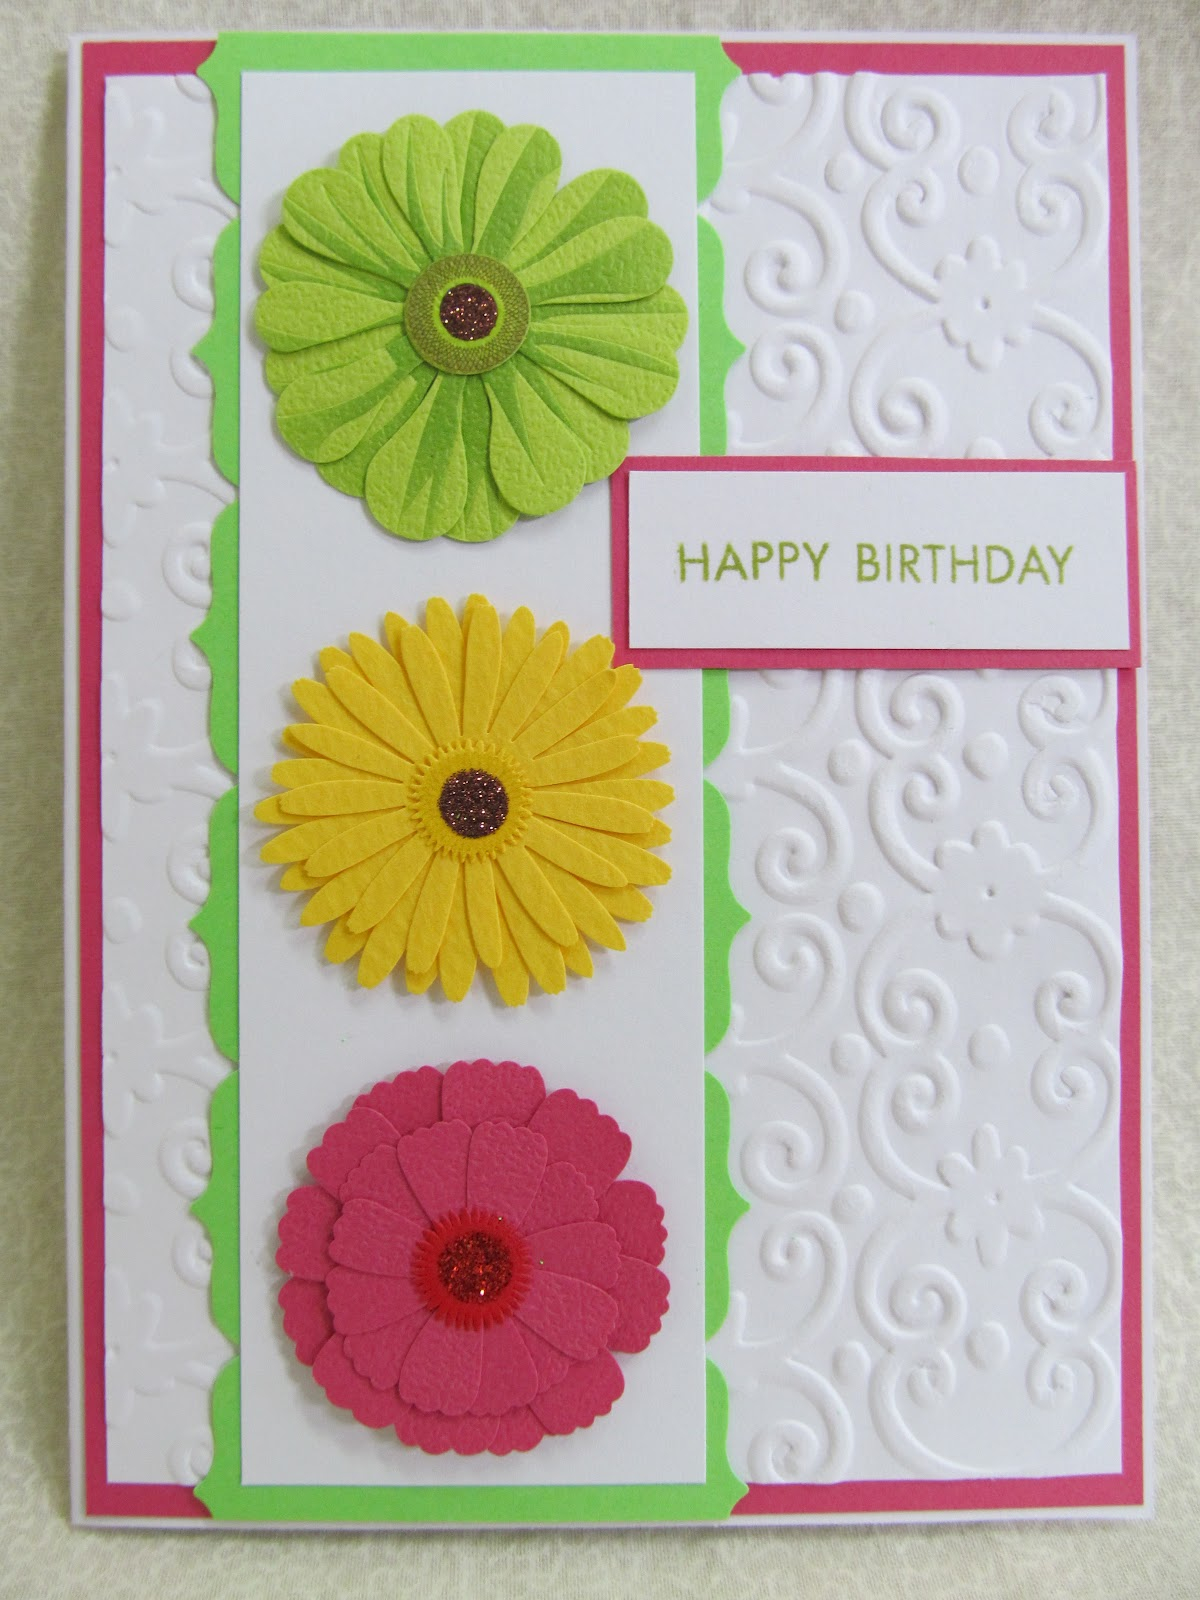 Handmade Birthday Invitation Card Ideas Simple And Cute Handmade Birthday Cards Cute Greeting Cards Bright